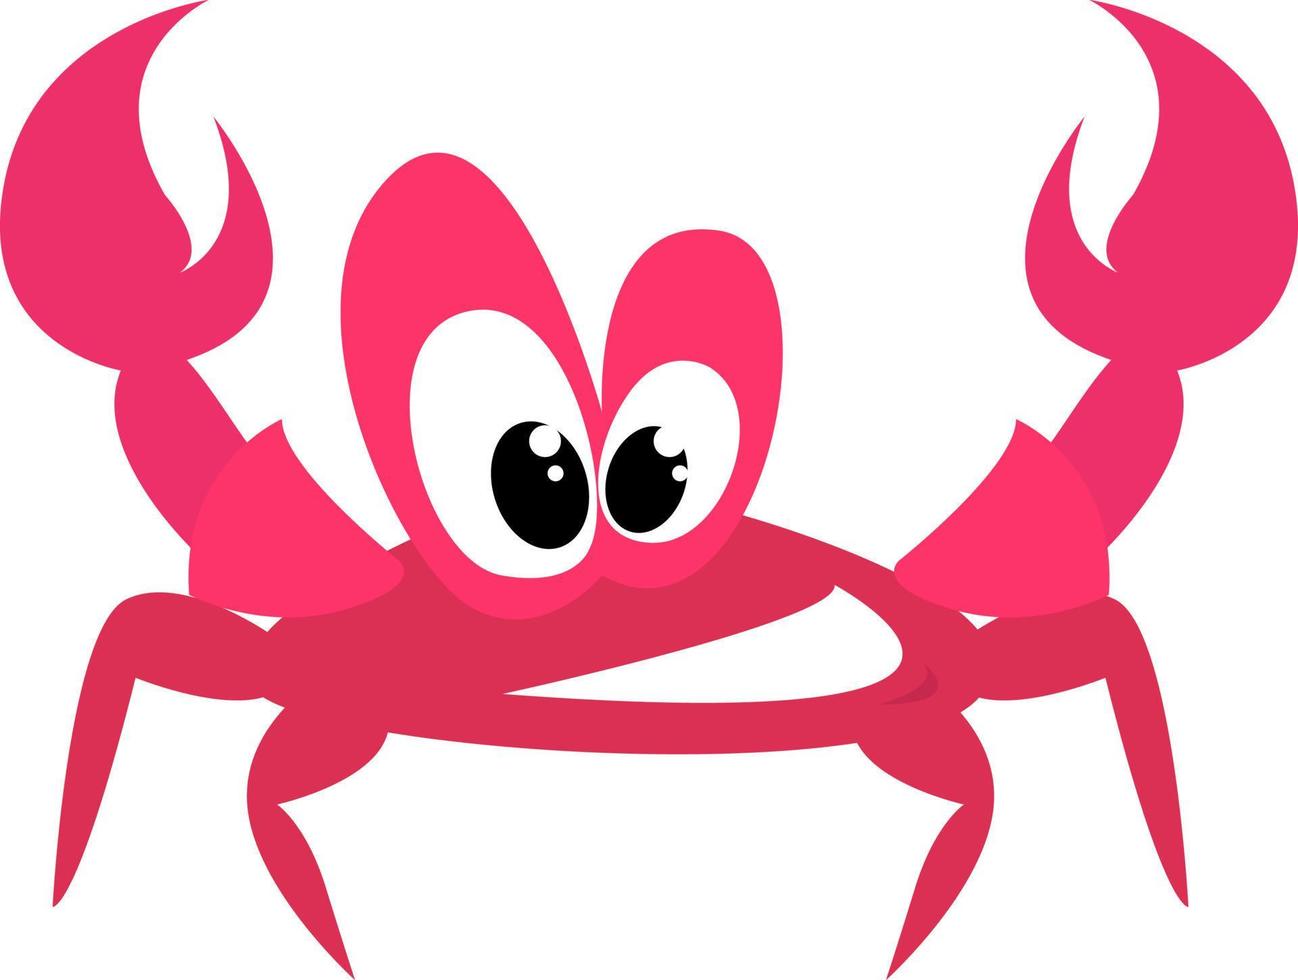 rosa krabba, illustration, vektor på vit bakgrund.